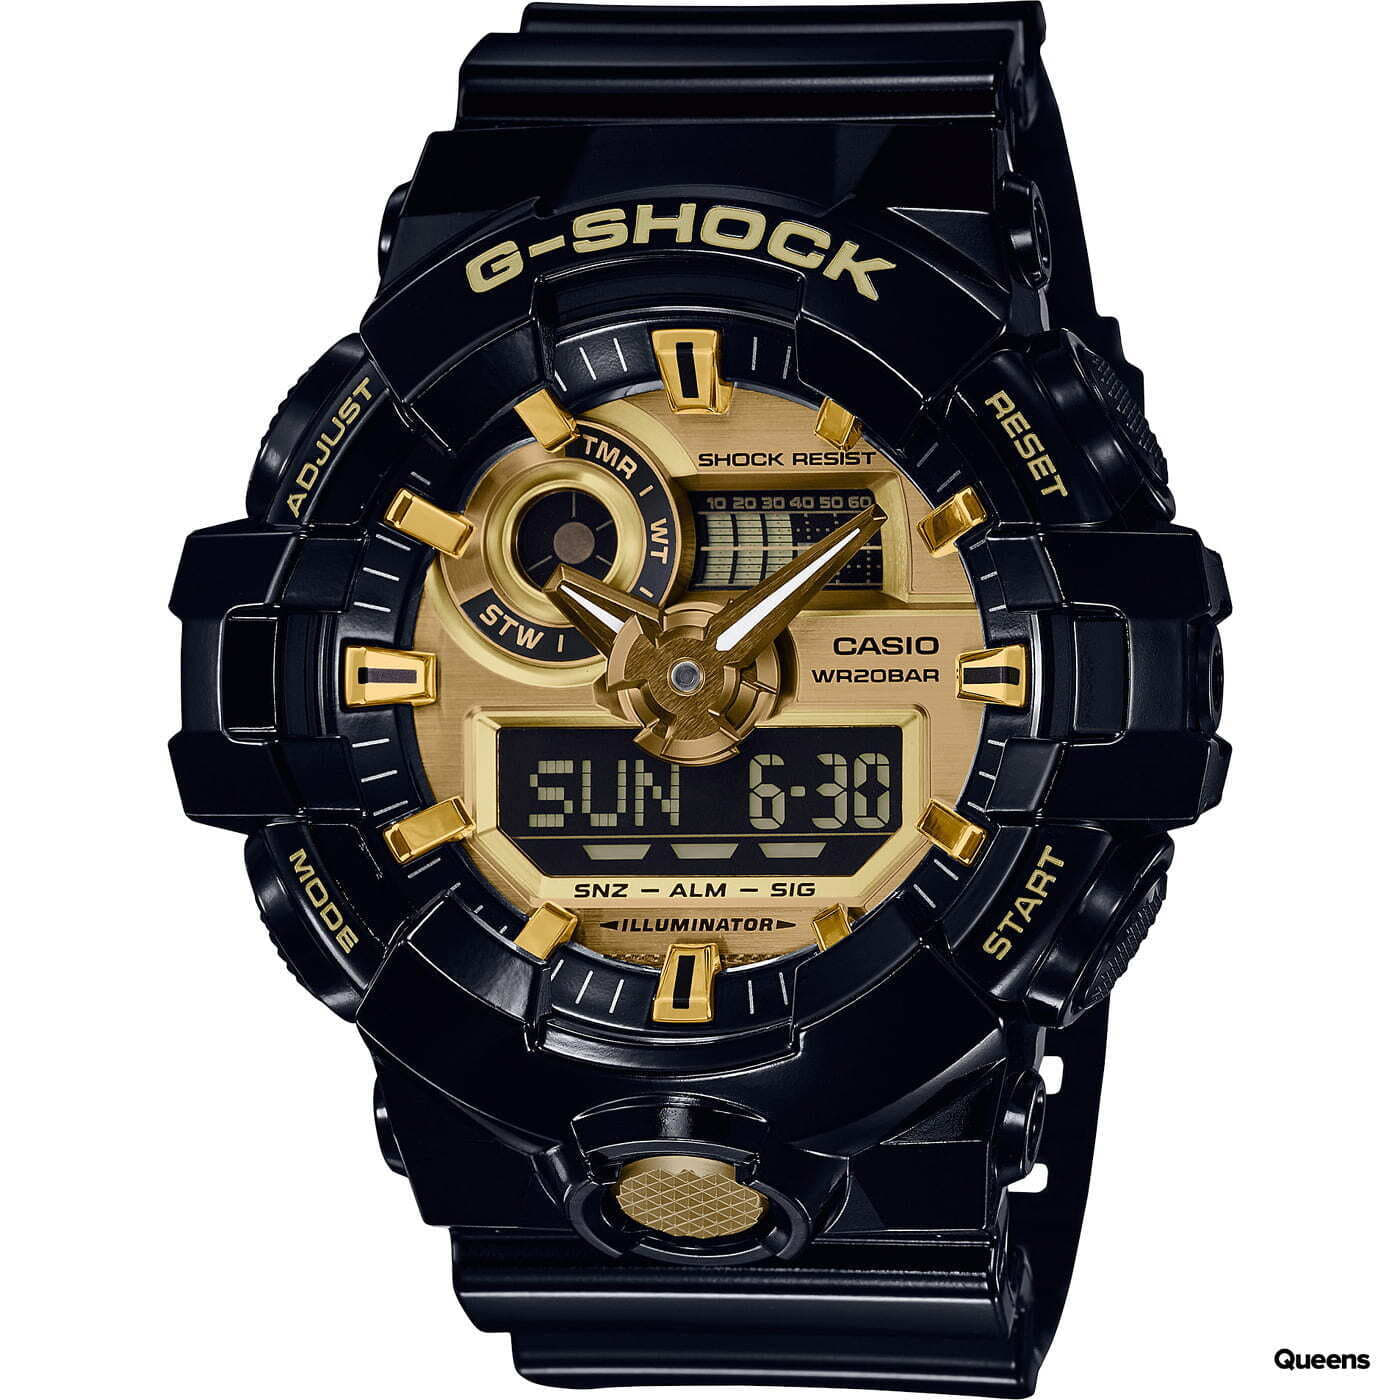 Casio G-Shock GA 710GB-1AER Black/ Gold